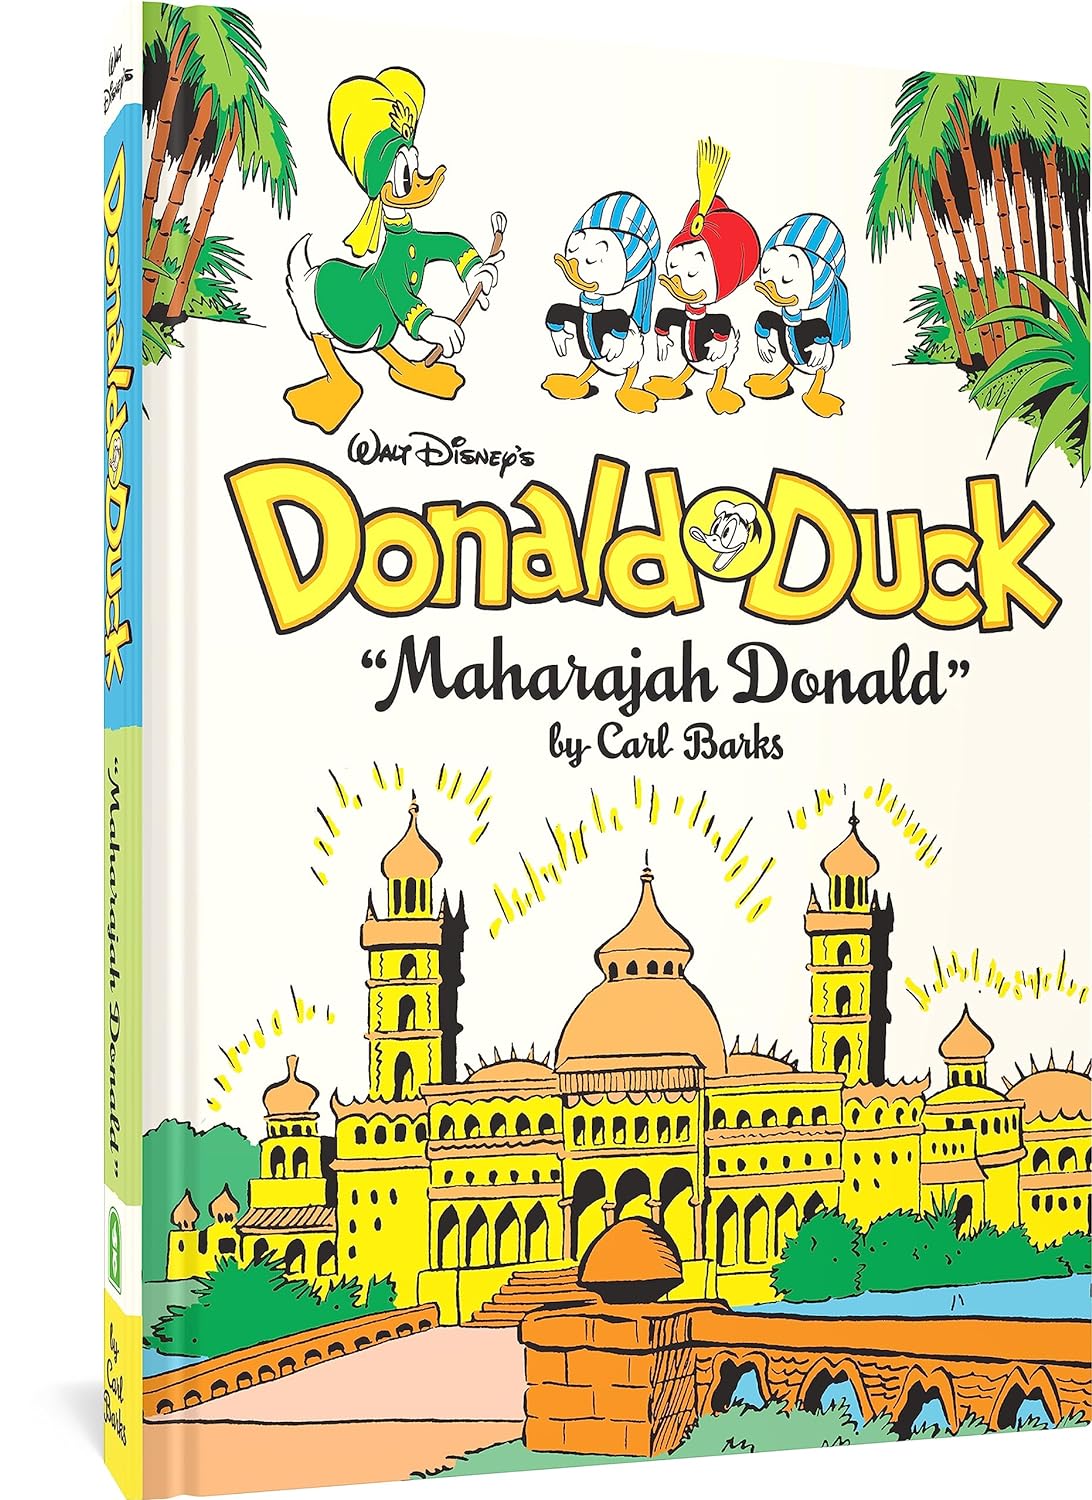 Walt Disneys Donald Duck Maharajah Donald The Complete Carl Barks Disney Library Vol. 4 HC